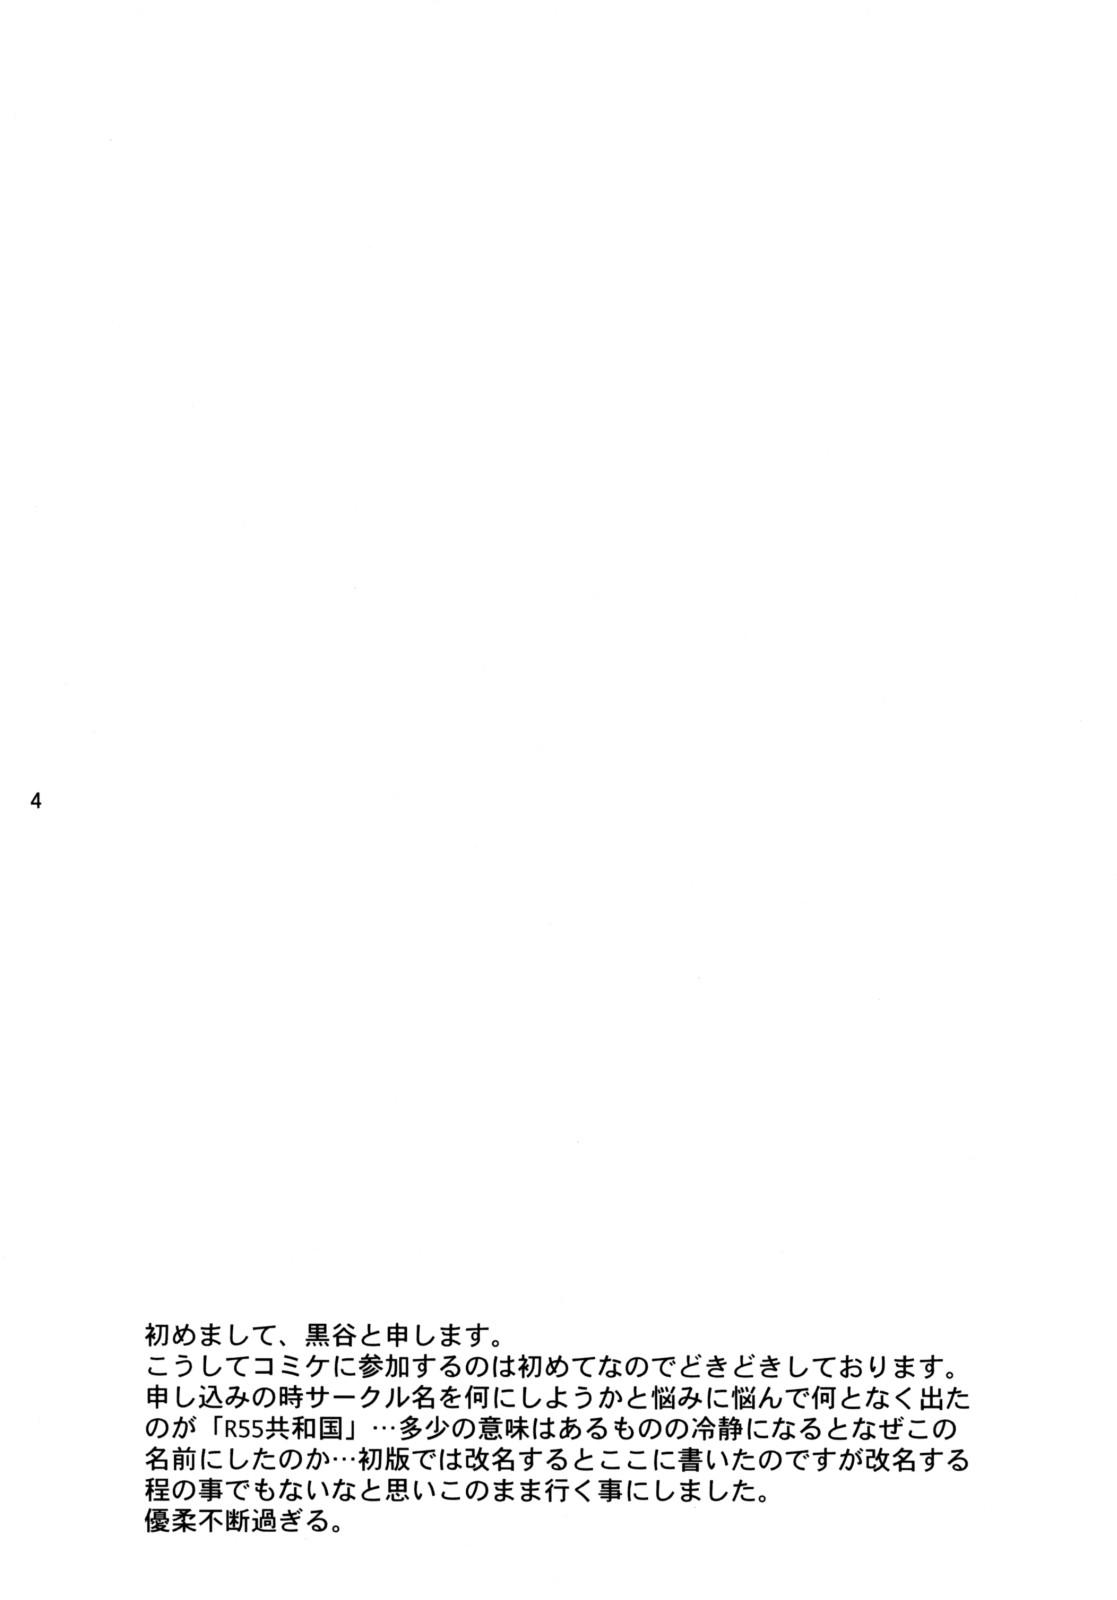 Com SOIX 3 - Fullmetal alchemist Freak - Page 4